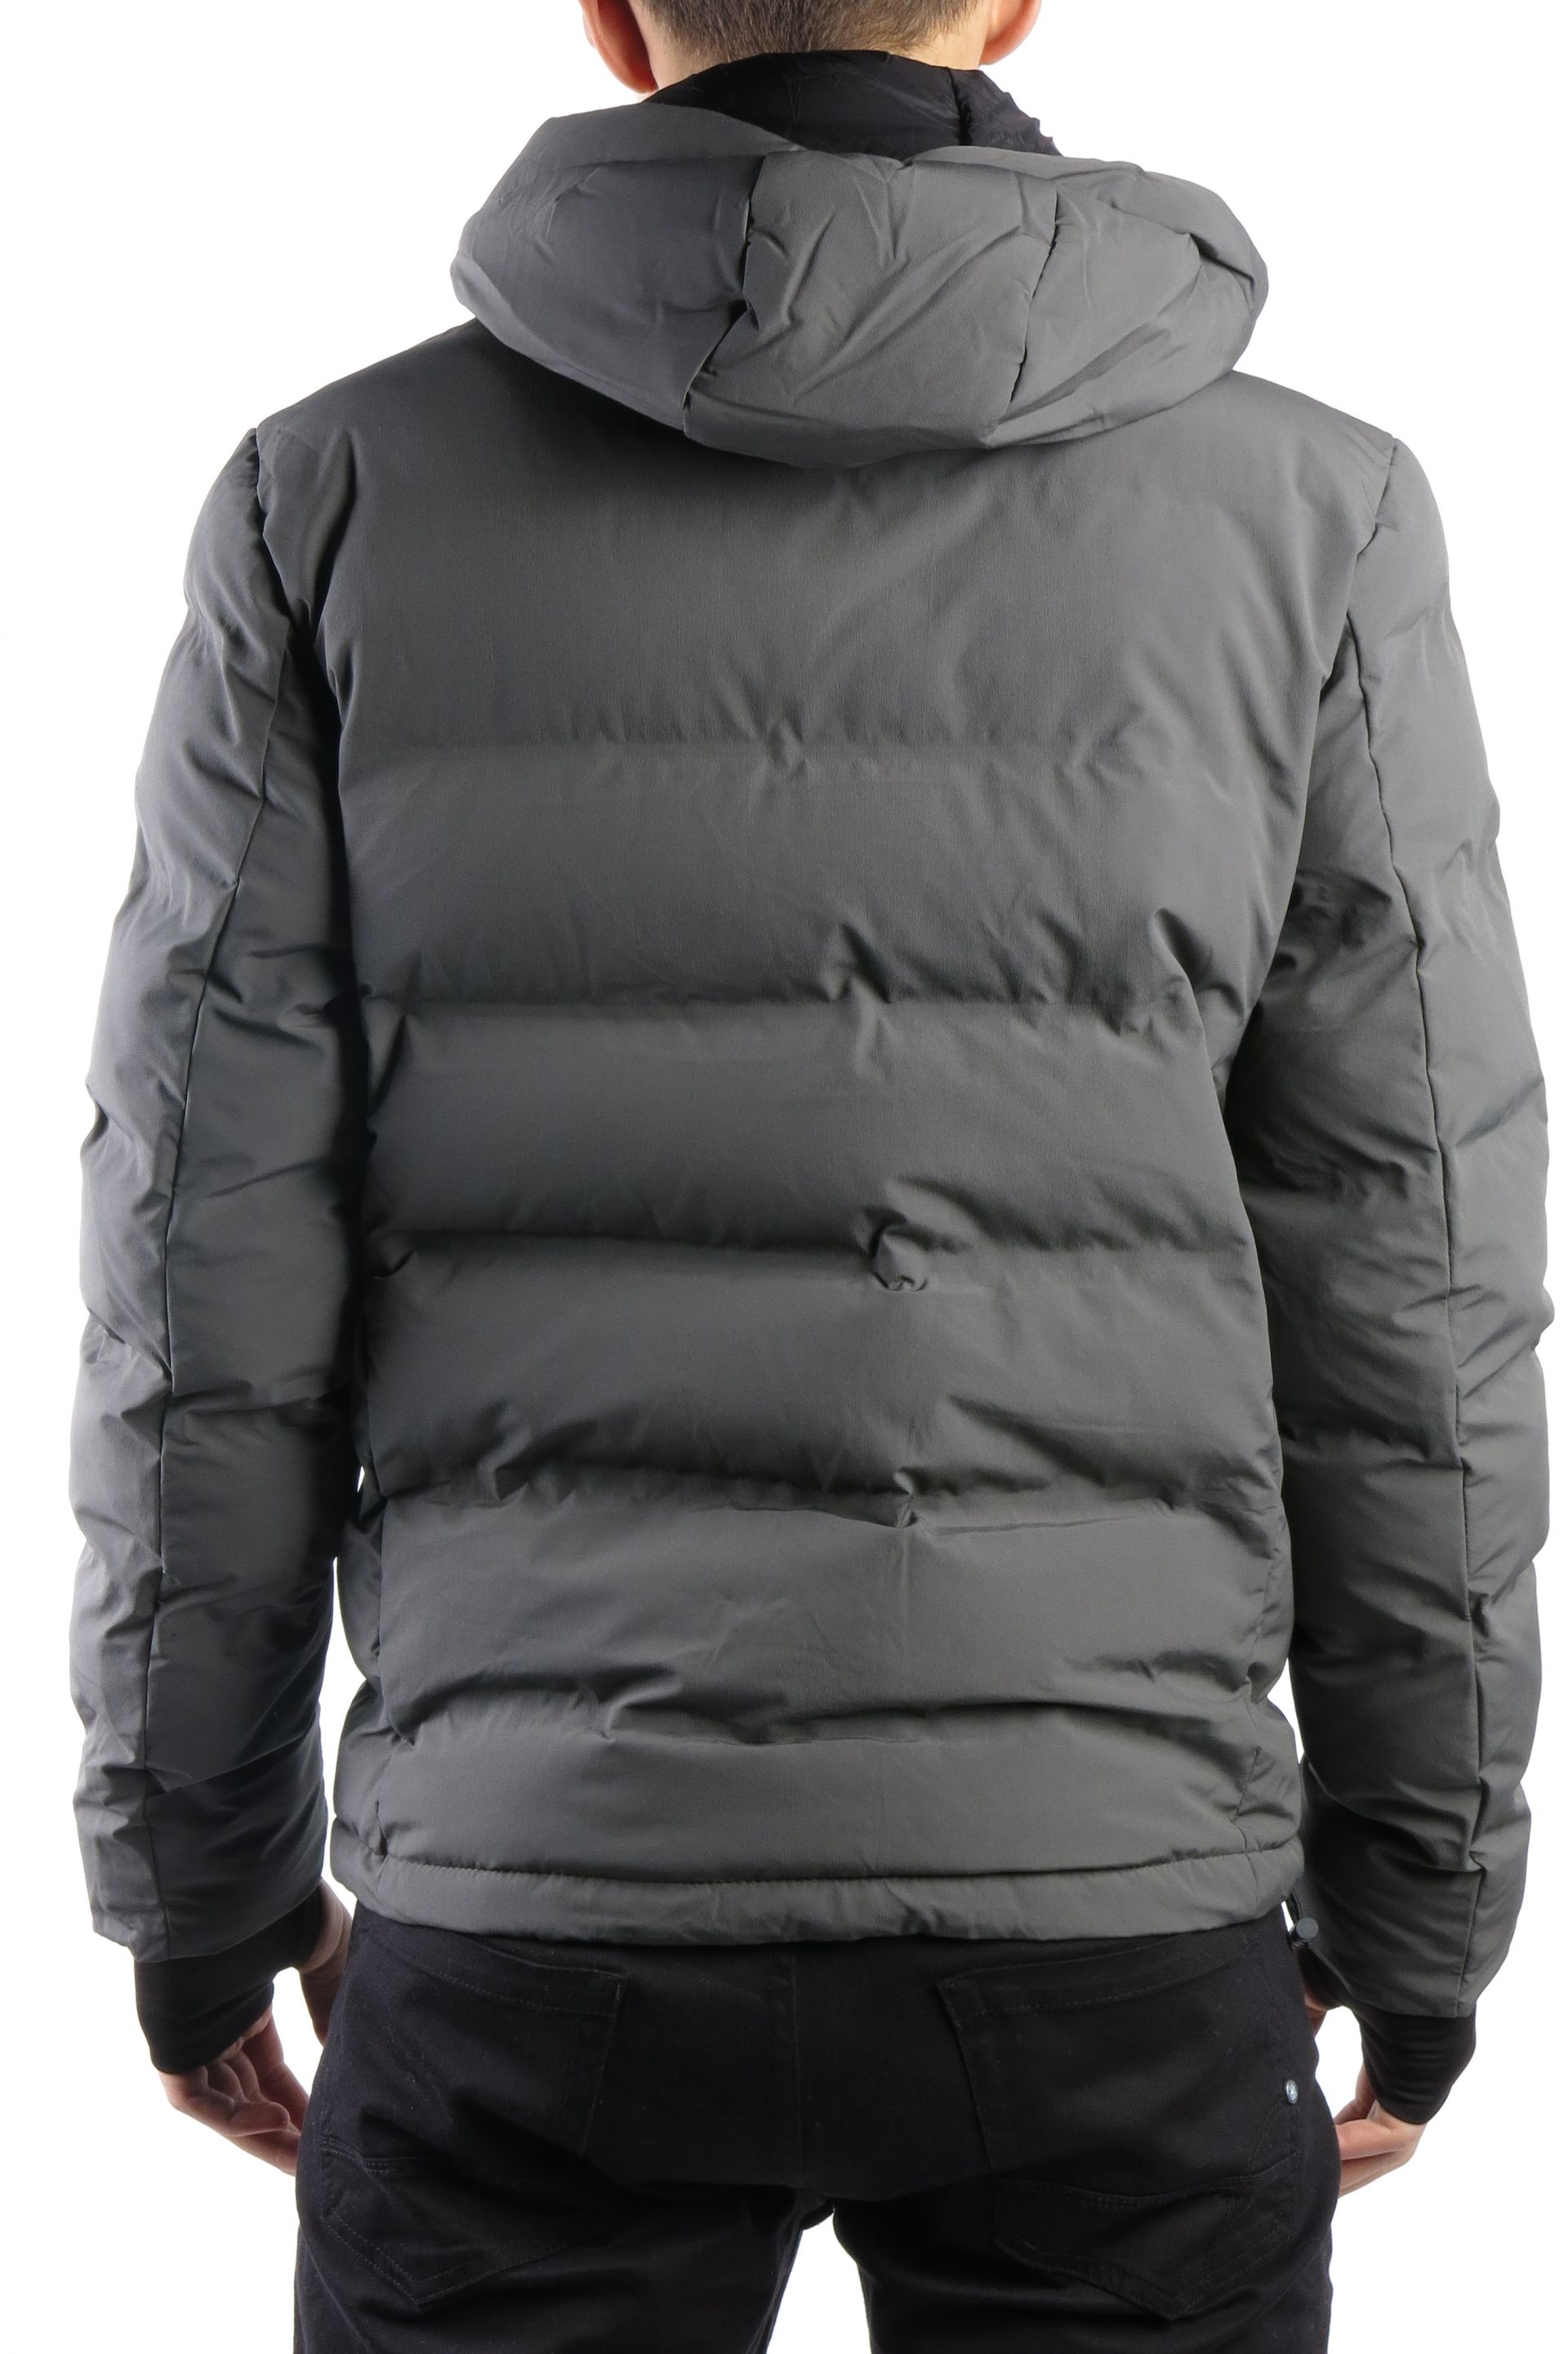 Winter jacket KENZARRO WK77272-GRAY